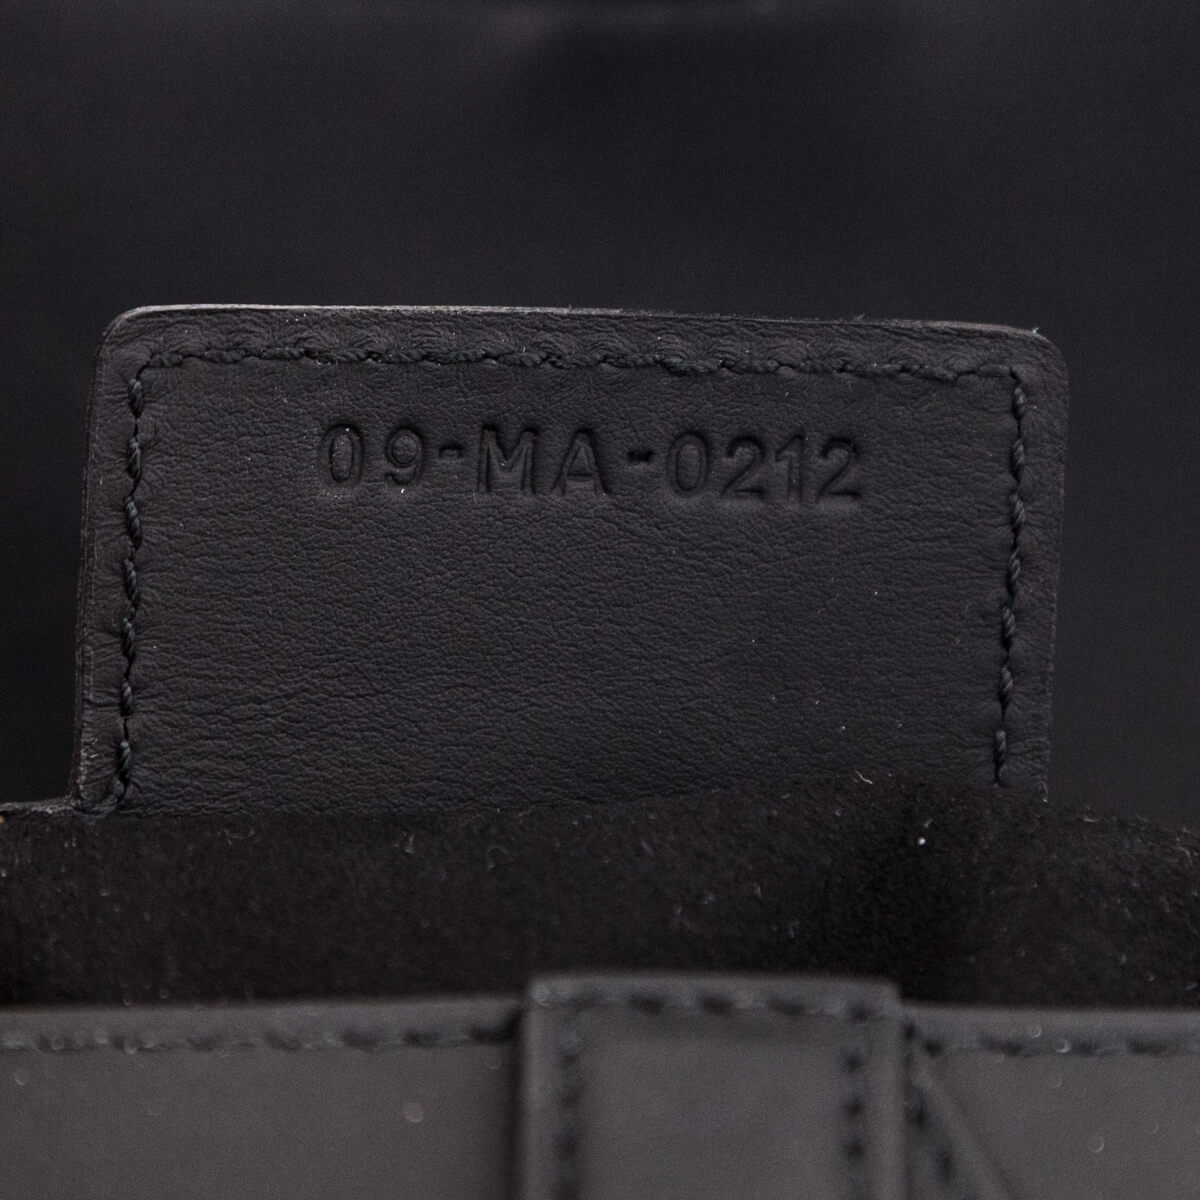 Dior Black Ultramatte Calfskin Saddle Bag - Love that Bag etc - Preowned Authentic Designer Handbags & Preloved Fashions